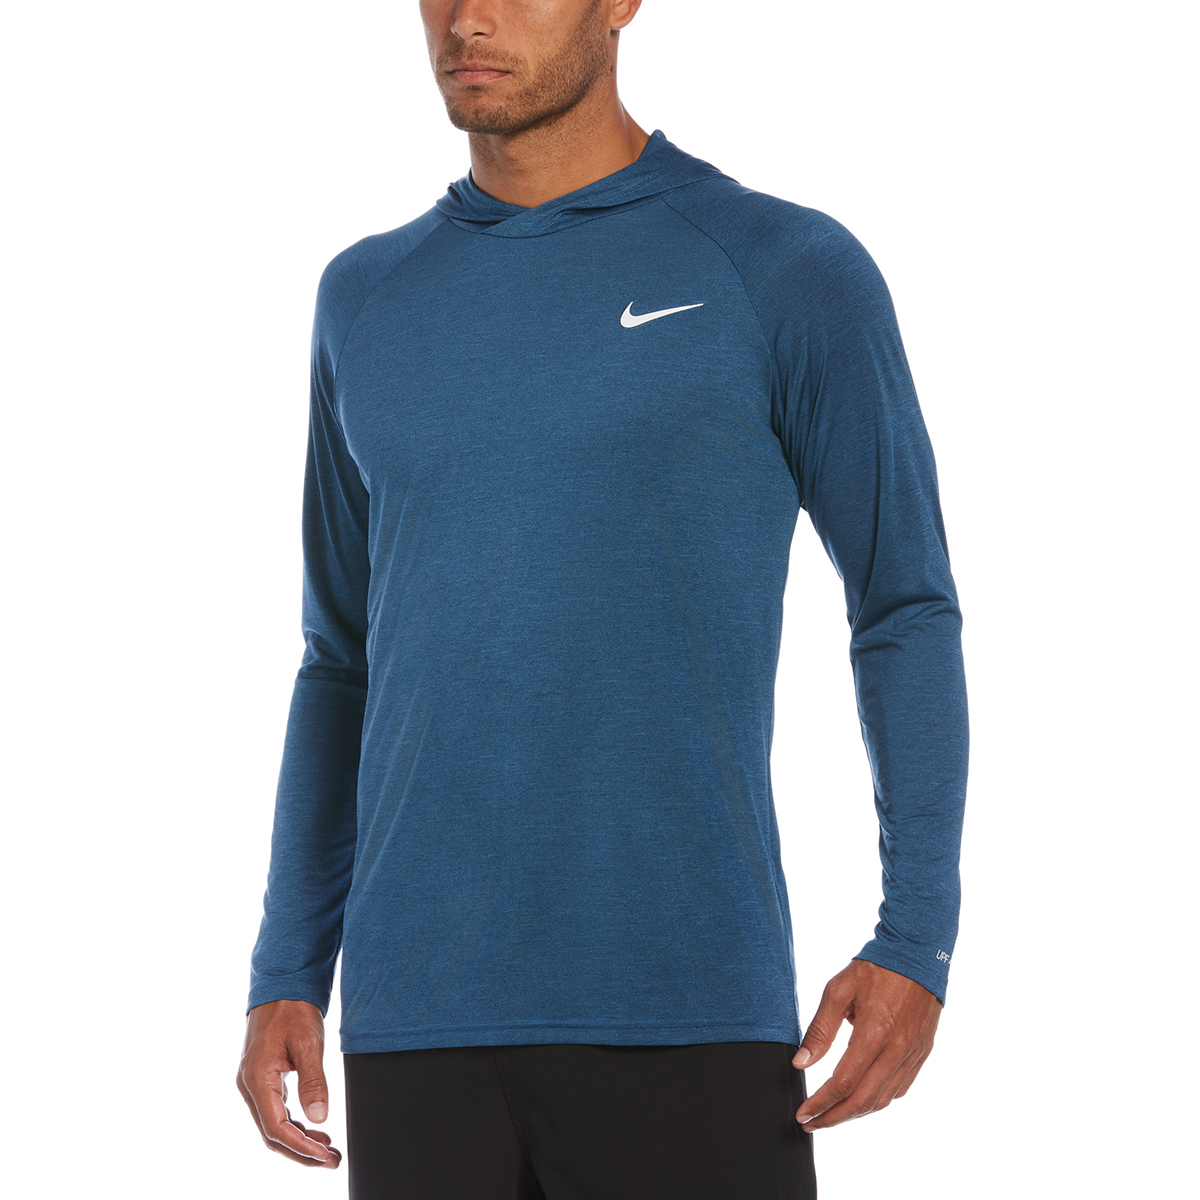 Nike Men's Hooded Long-Sleeve Rashguard Shirt